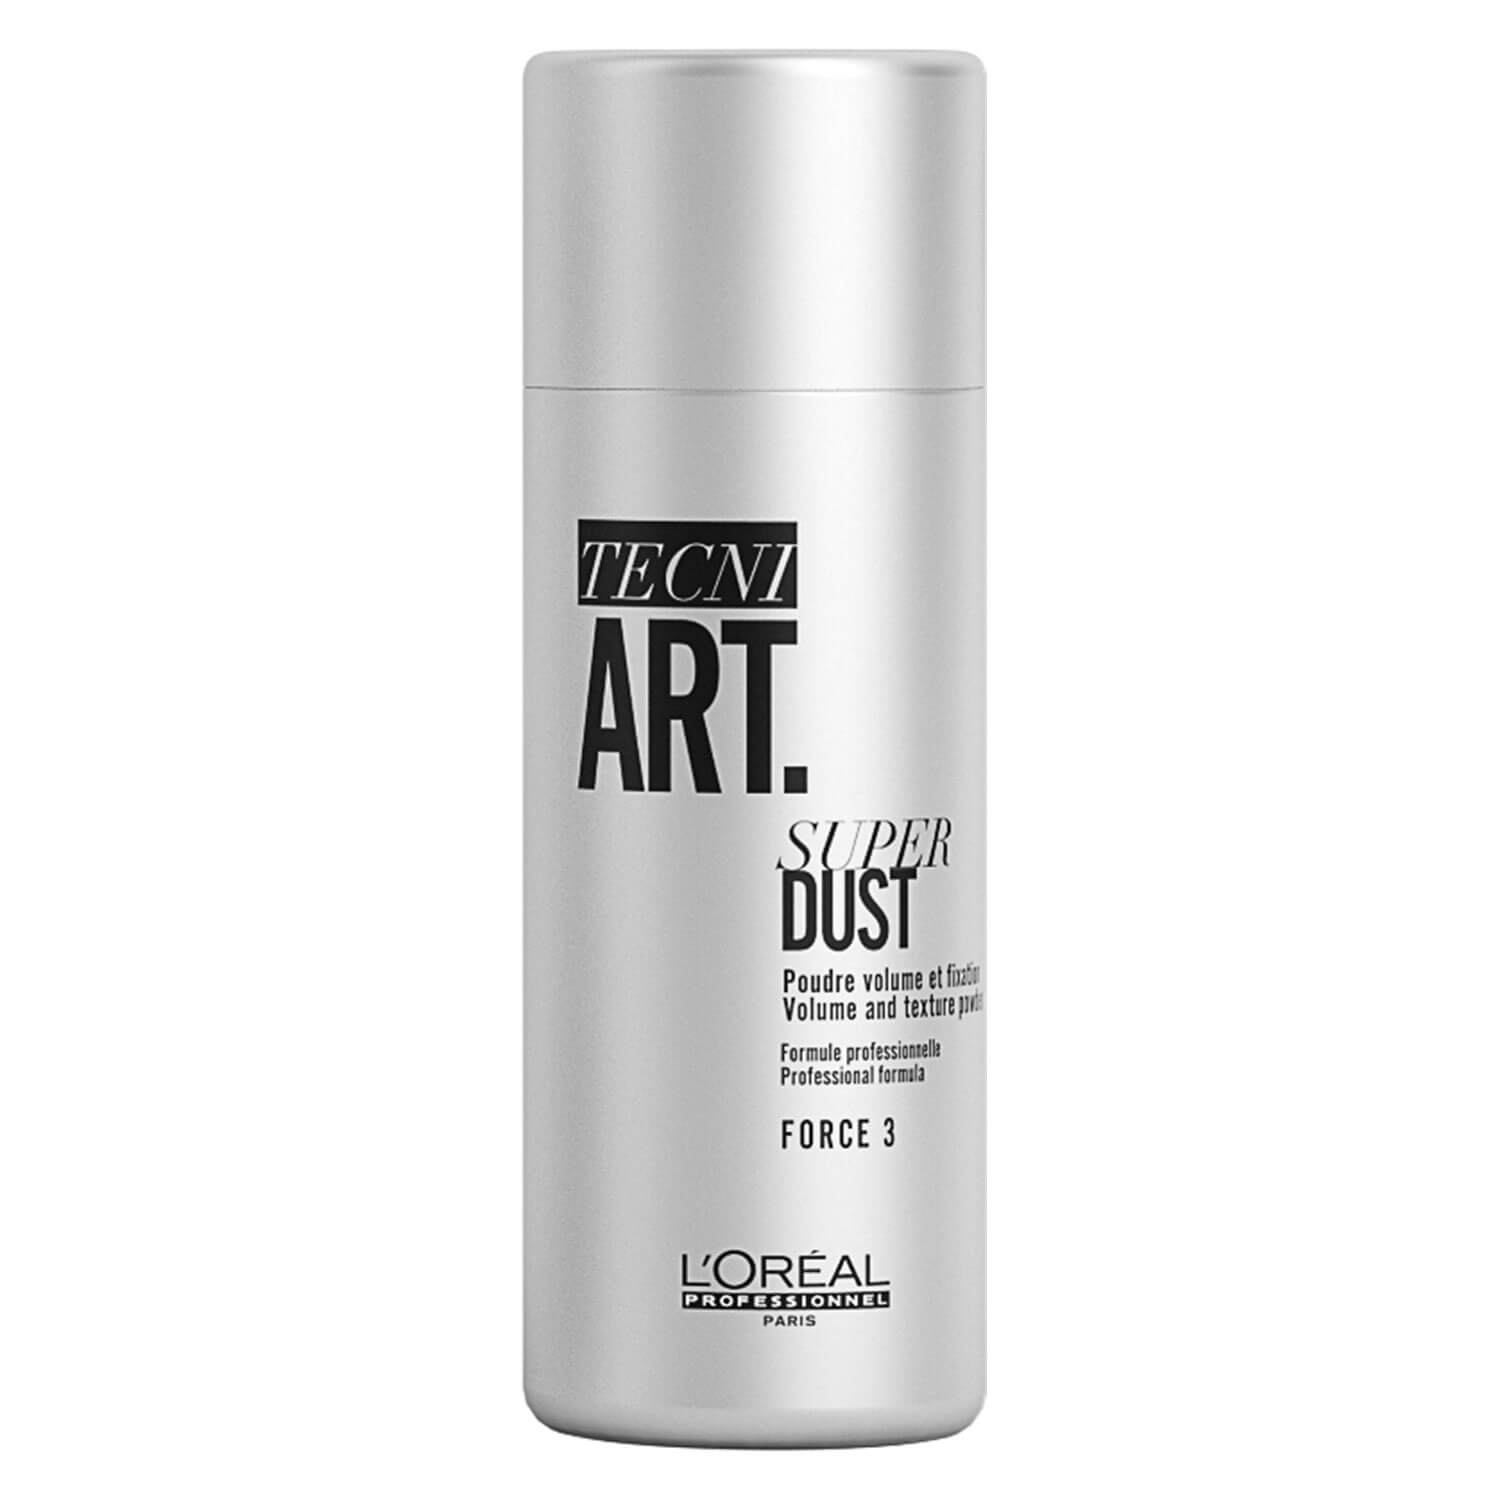 Product image from Tecni.art Texturiser - Super Dust